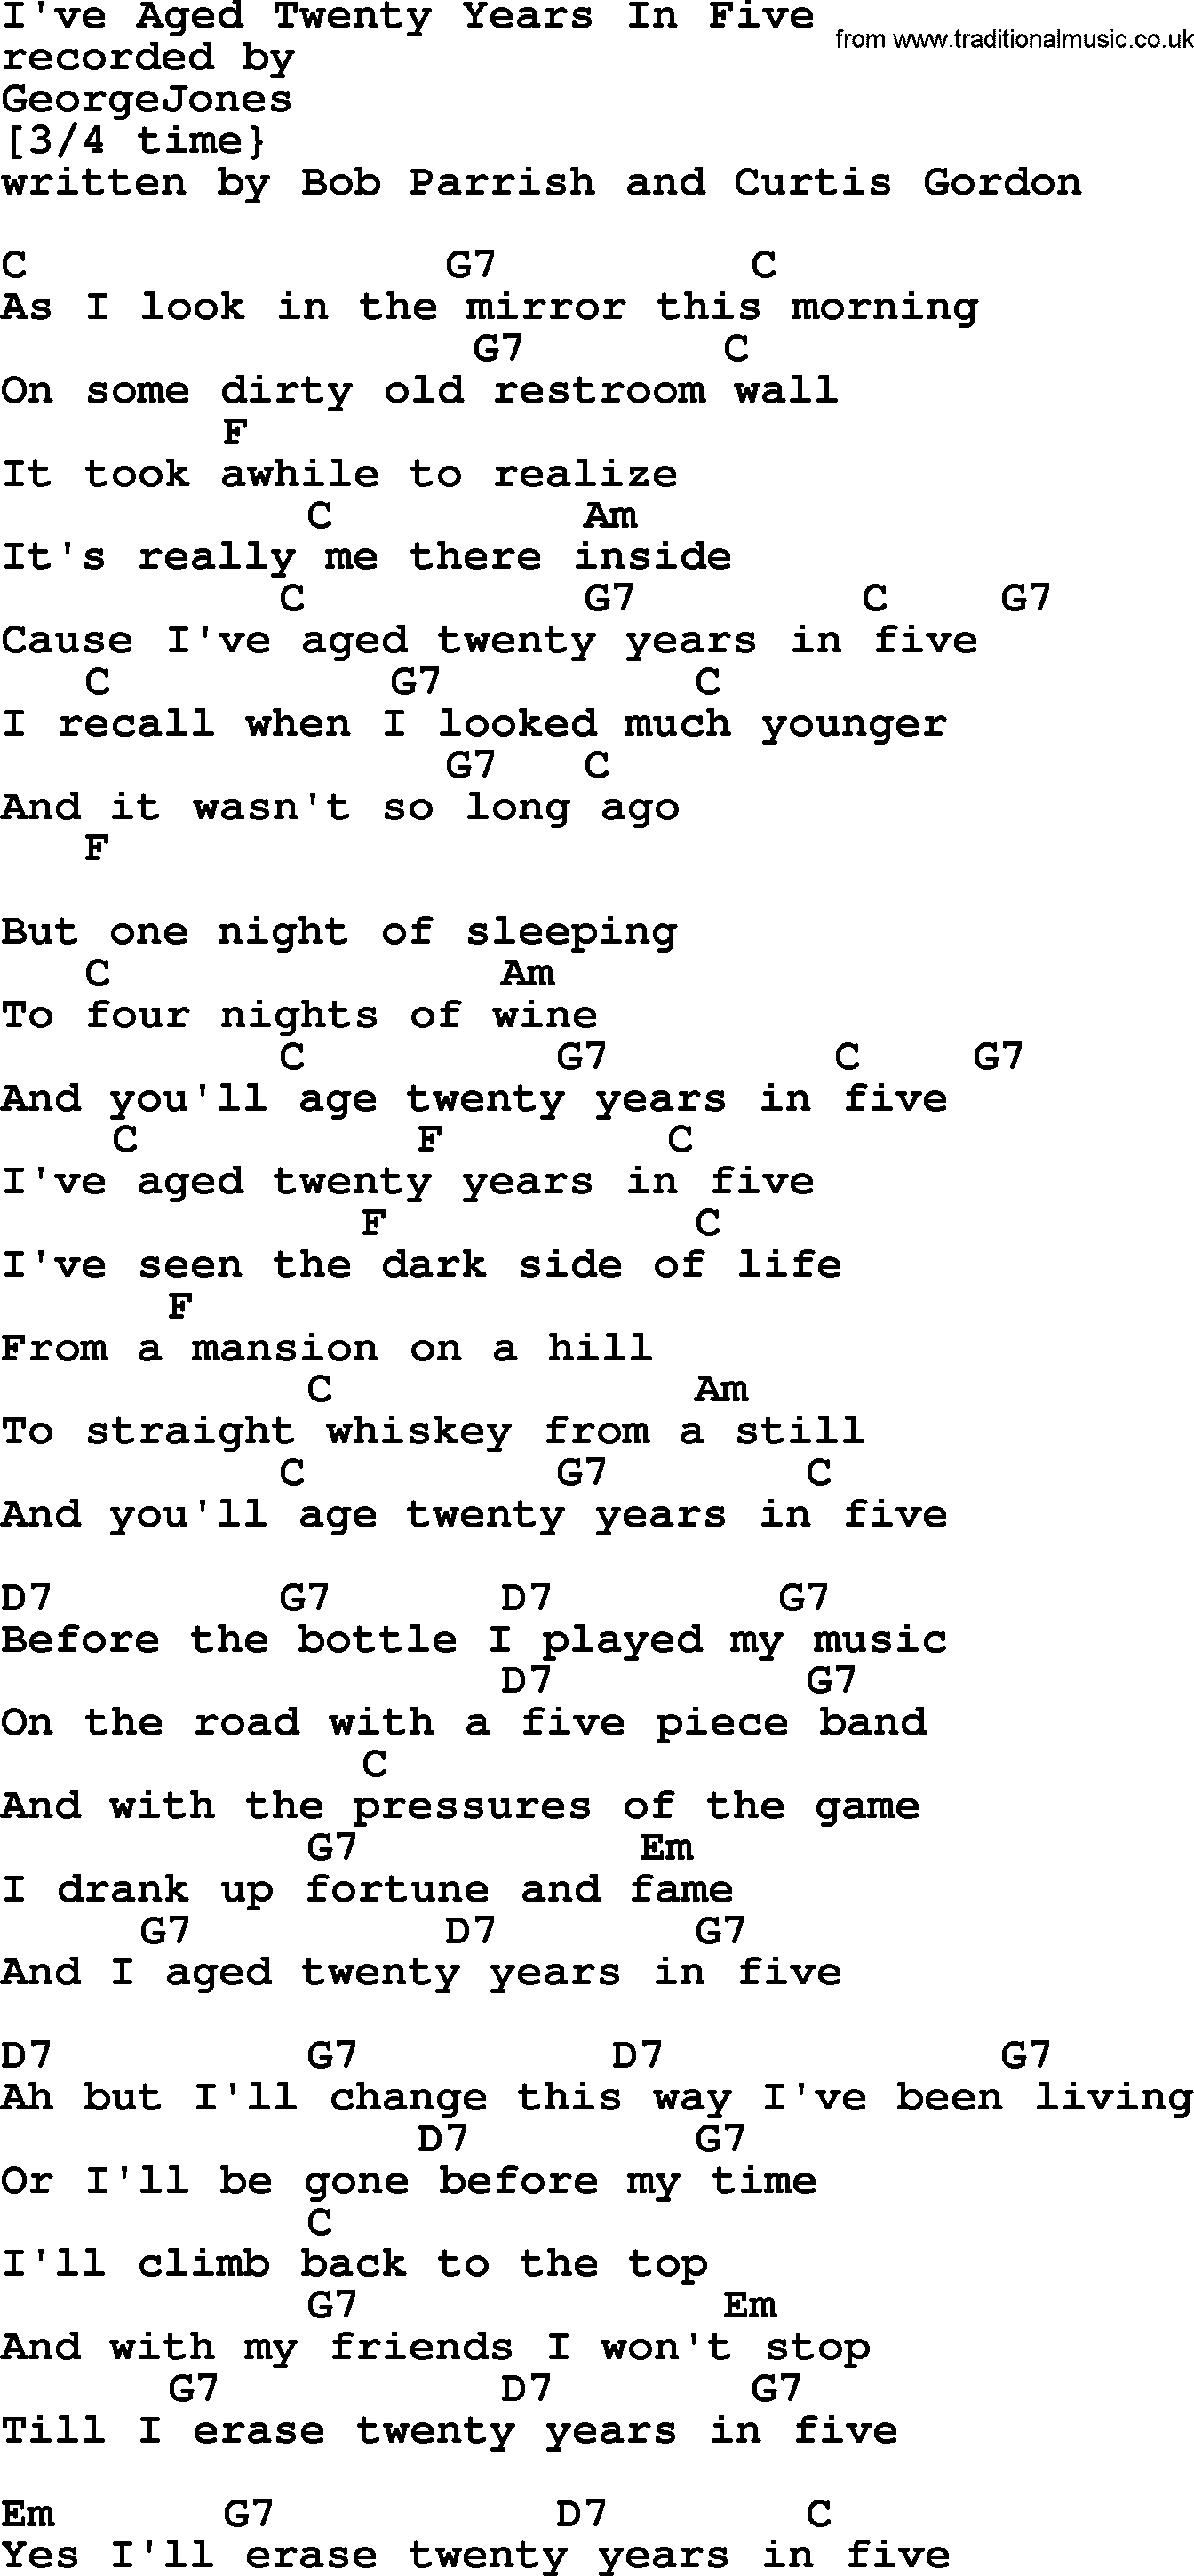 George Jones song: I've Aged Twenty Years In Five, lyrics and chords